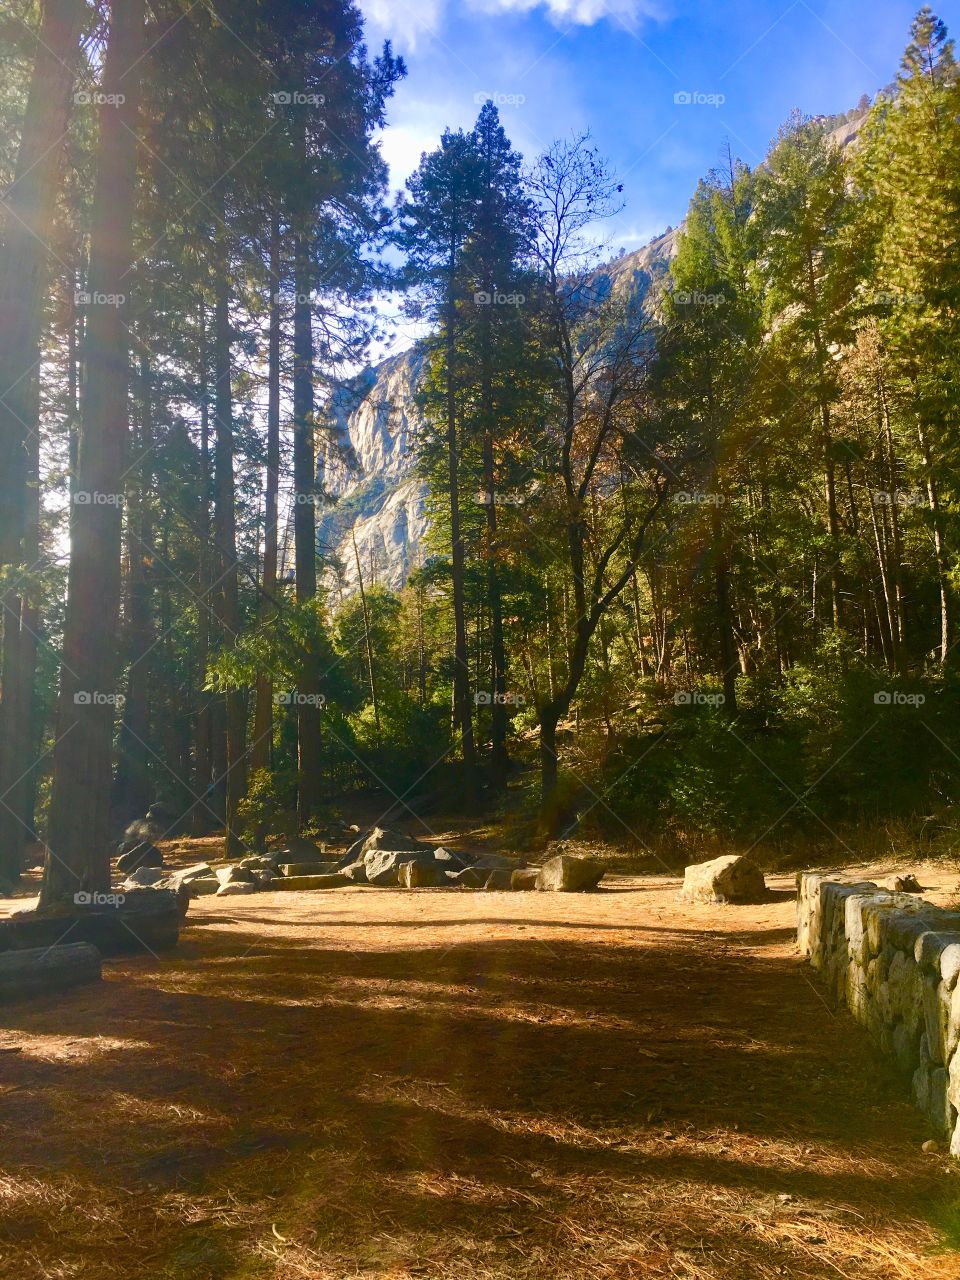 More photos of Yosemite National Park